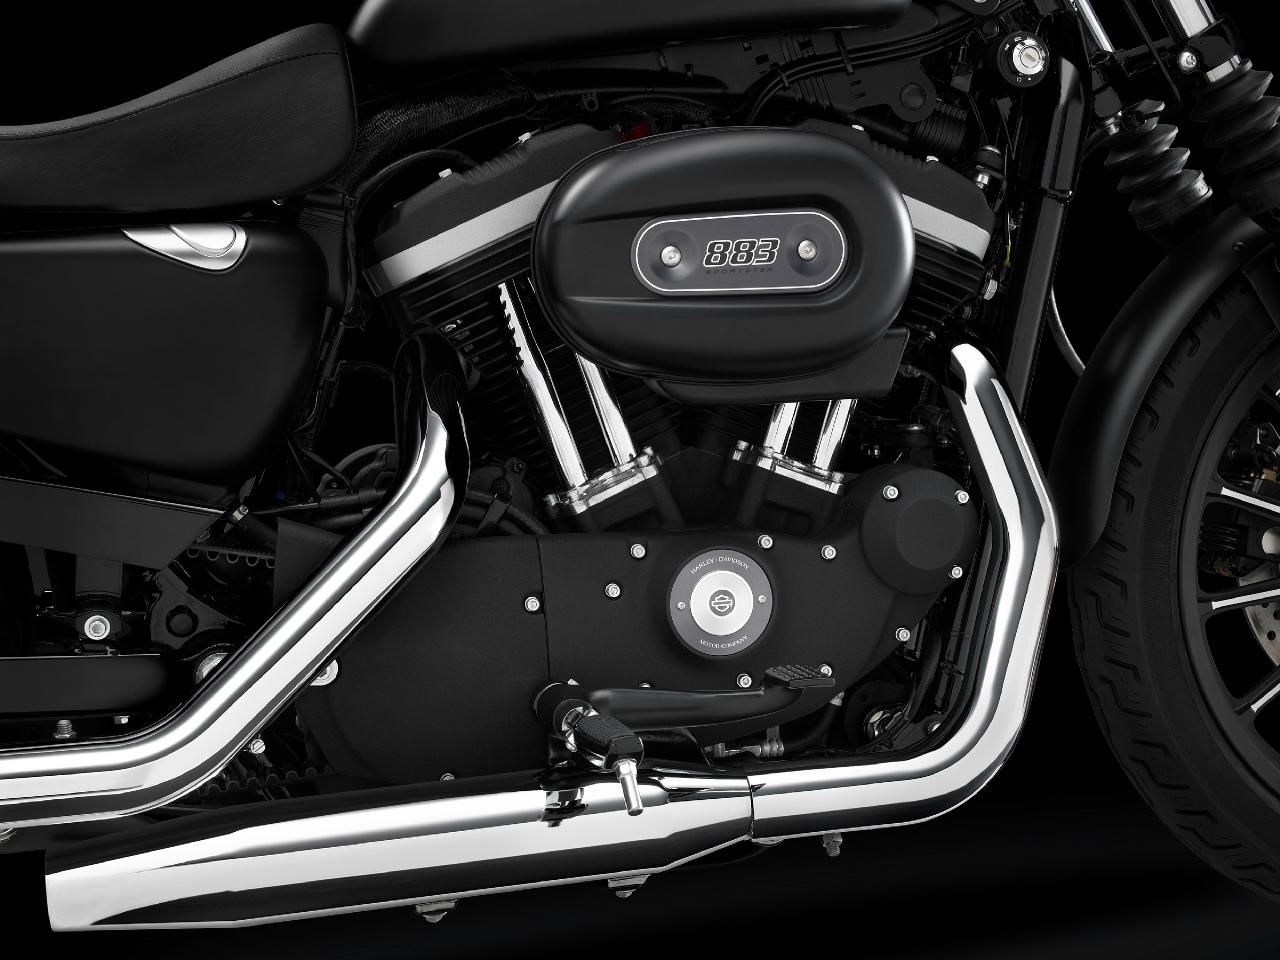  2009 Harley-Davidson Sportster Iron 883 Engine